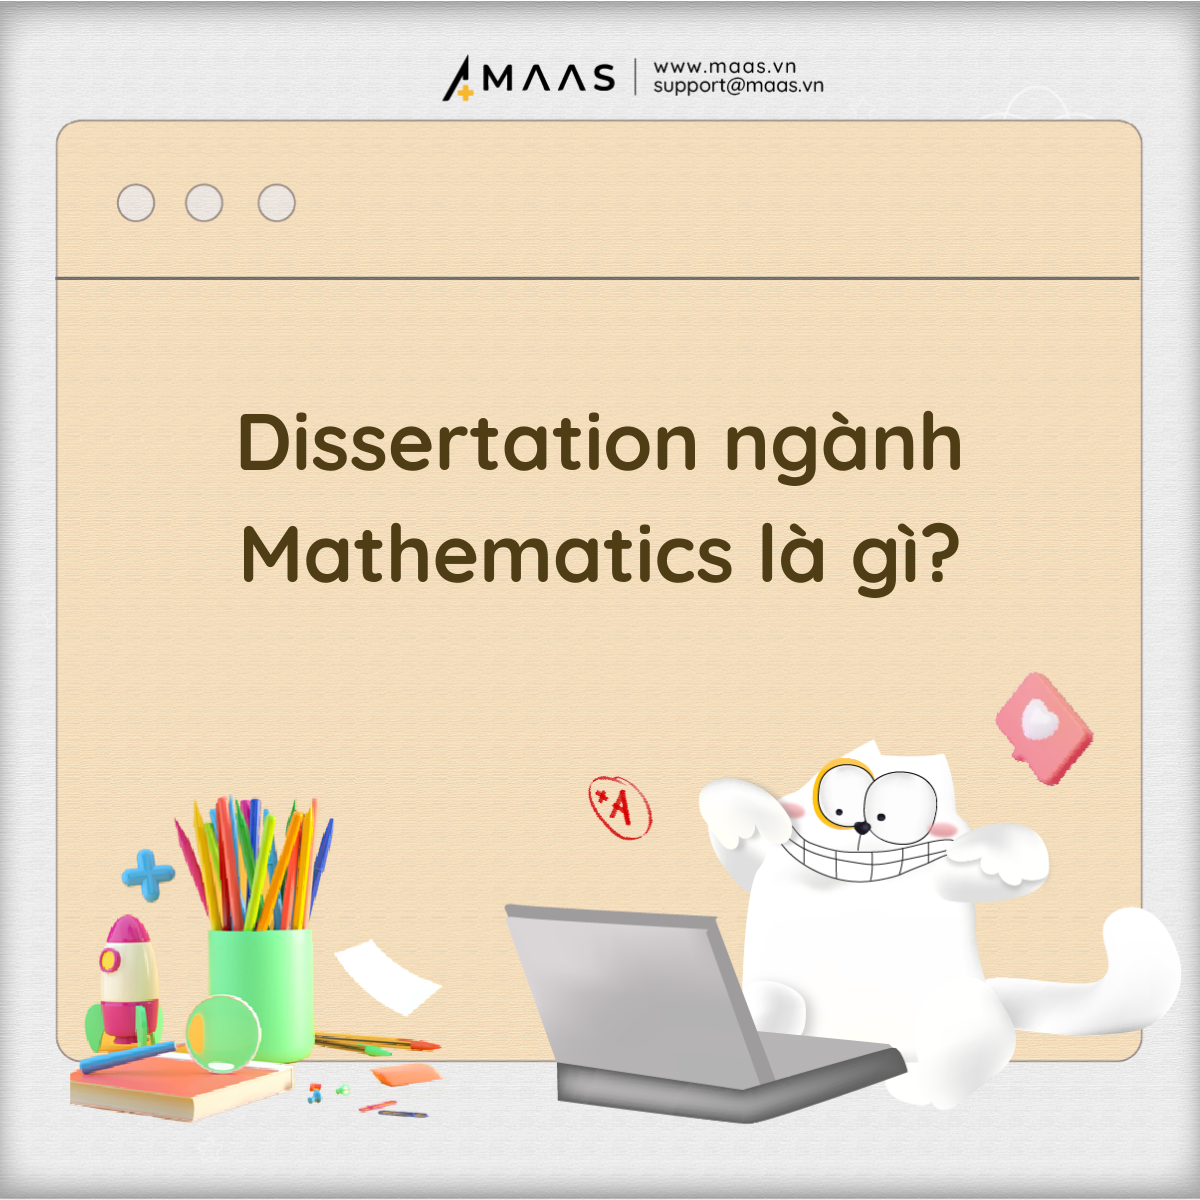 Mathematics Dissertation